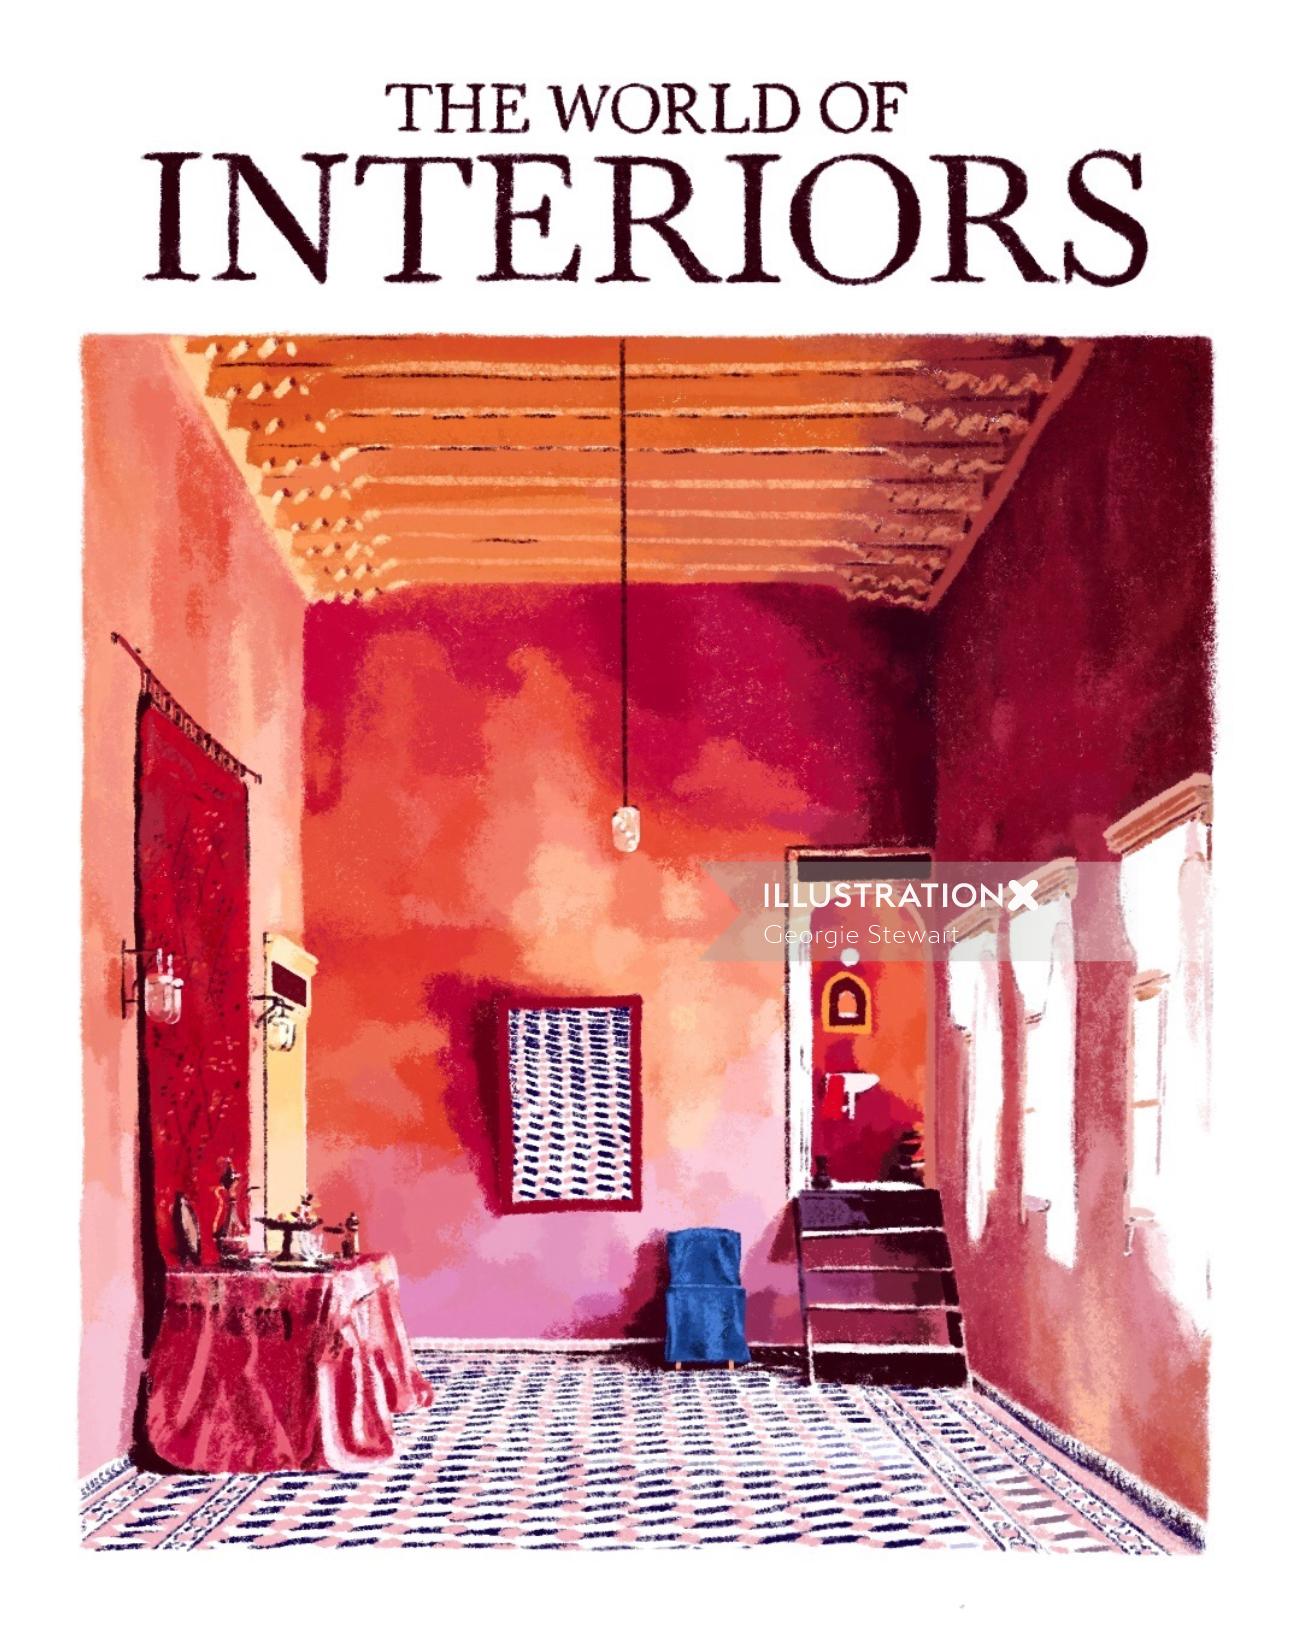 Couverture du magazine The World of Interiors